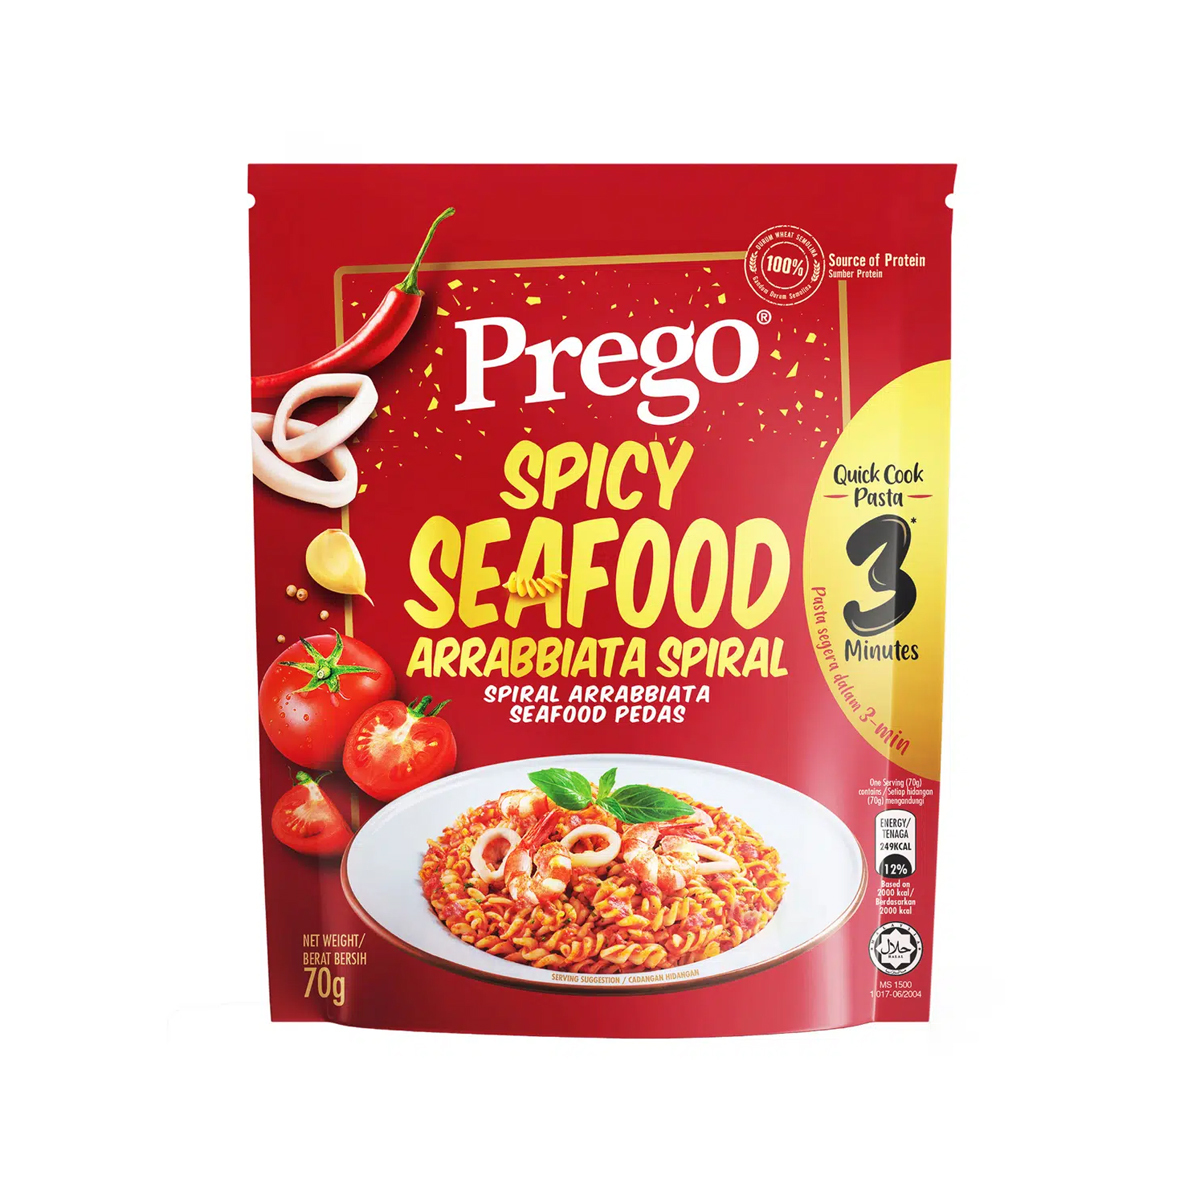 Prego Spicy Seafood Arrabbiata Spiral 70g